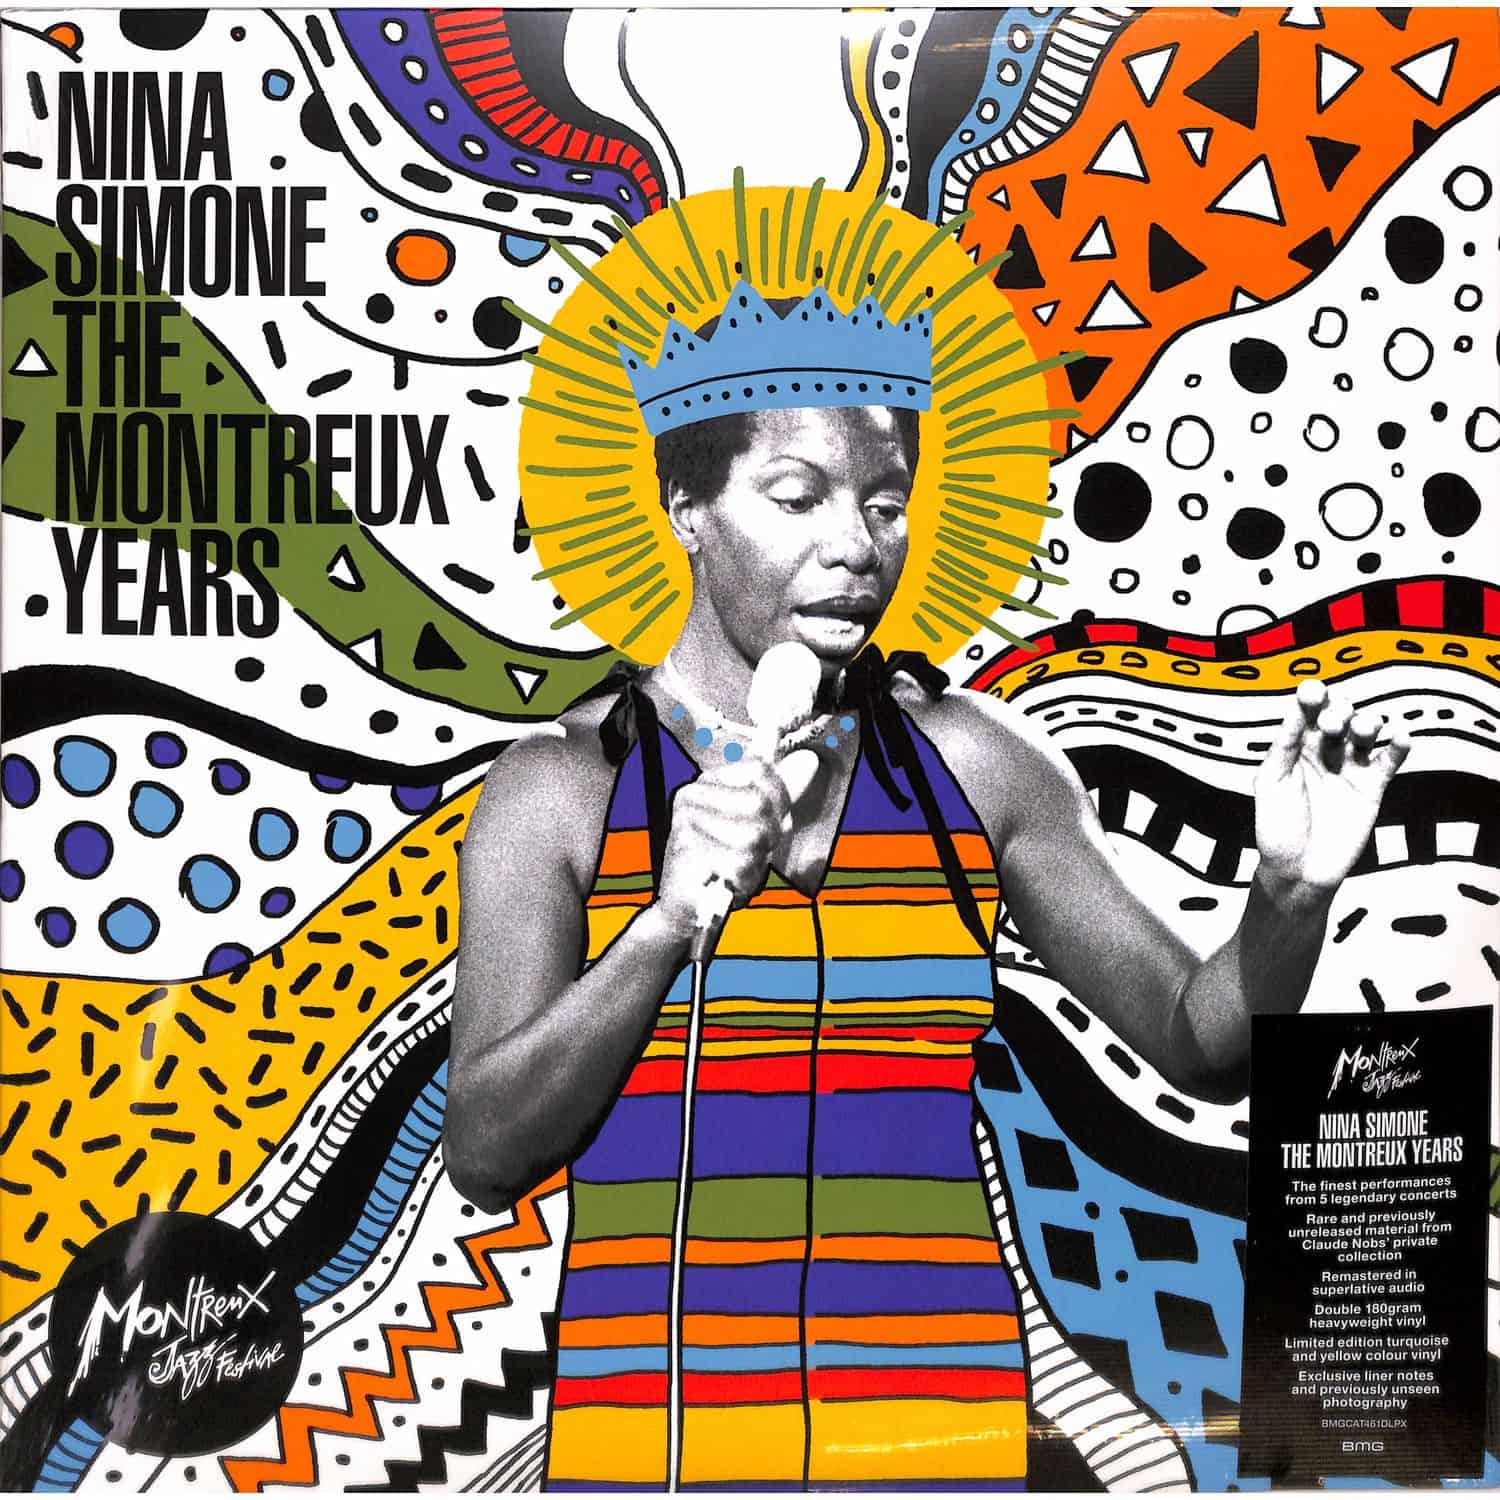 Nina Simone - THE MONTREUX YEARS 